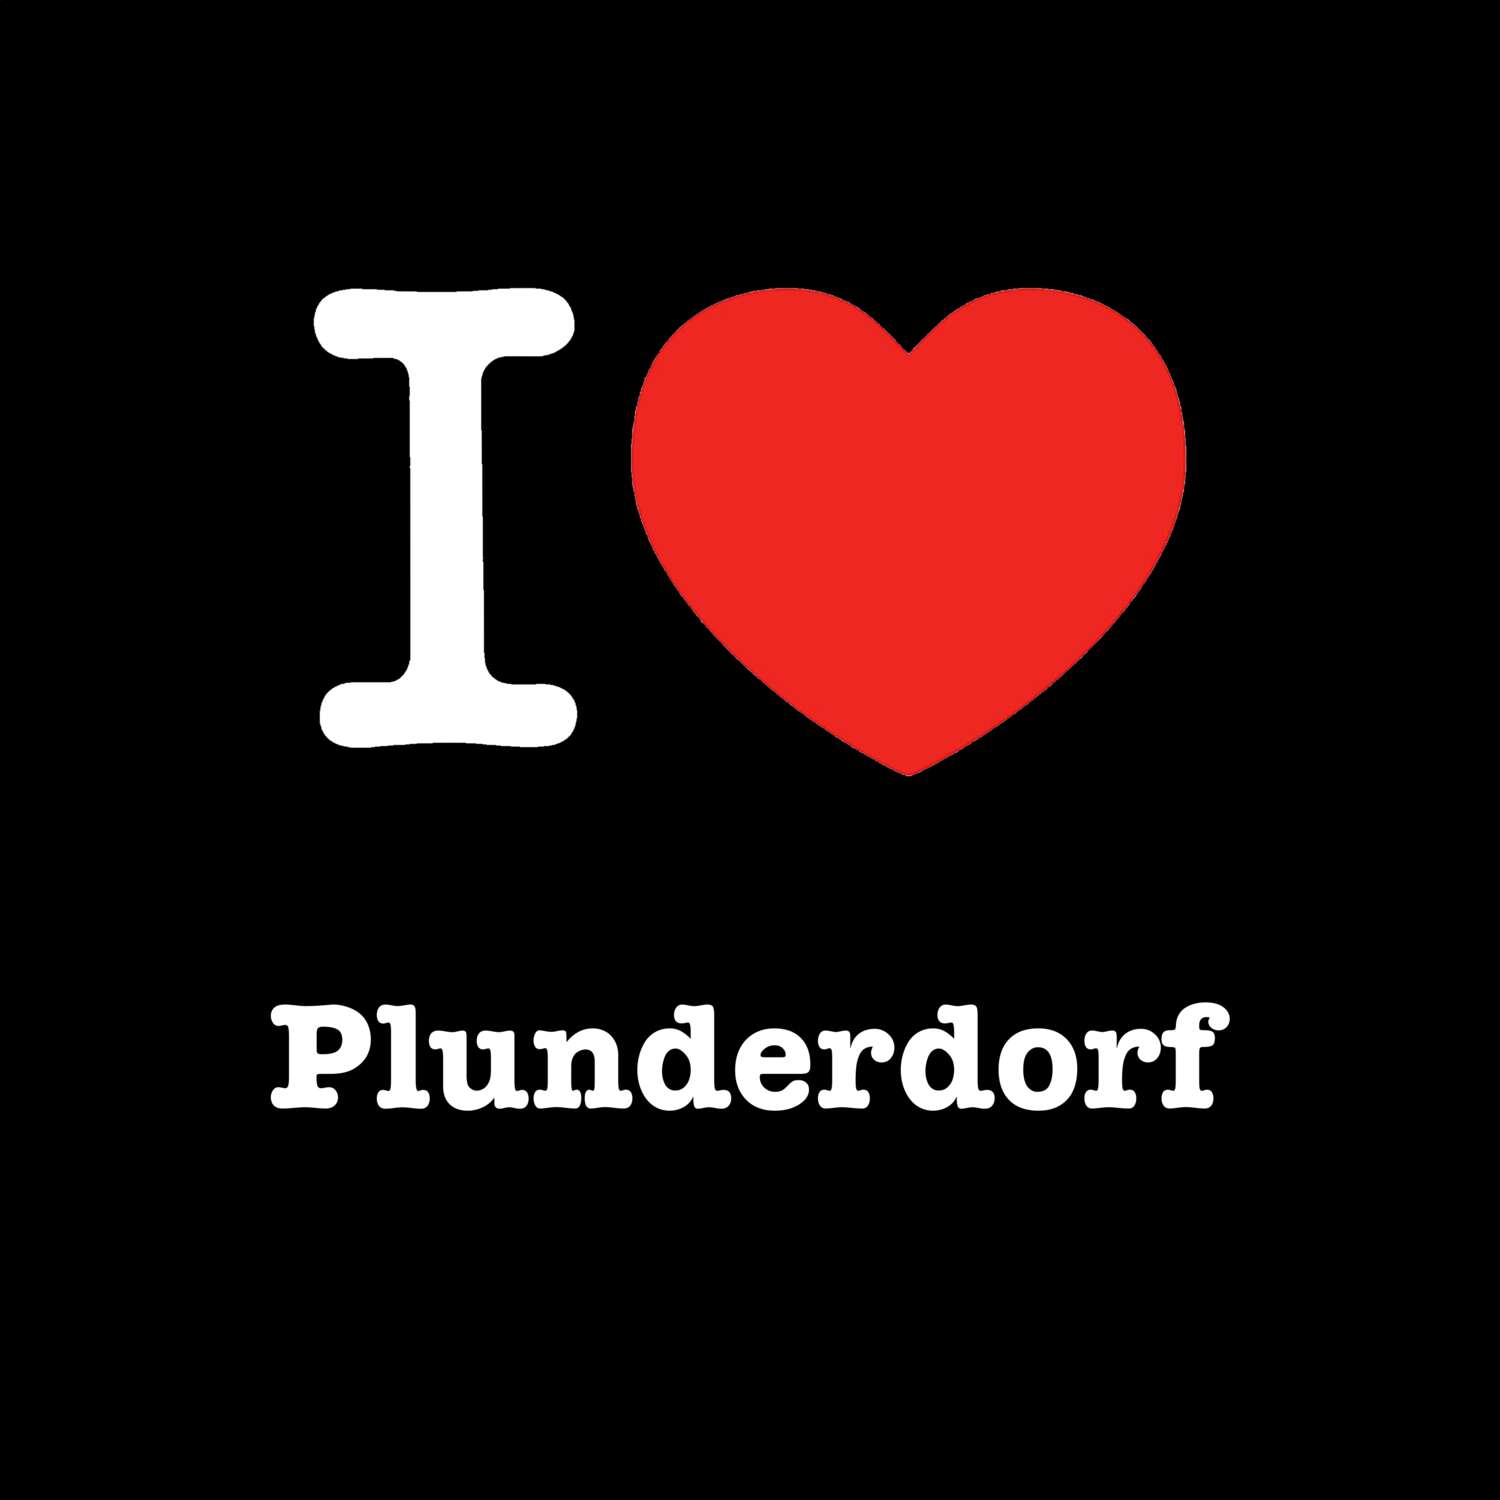 Plunderdorf T-Shirt »I love«